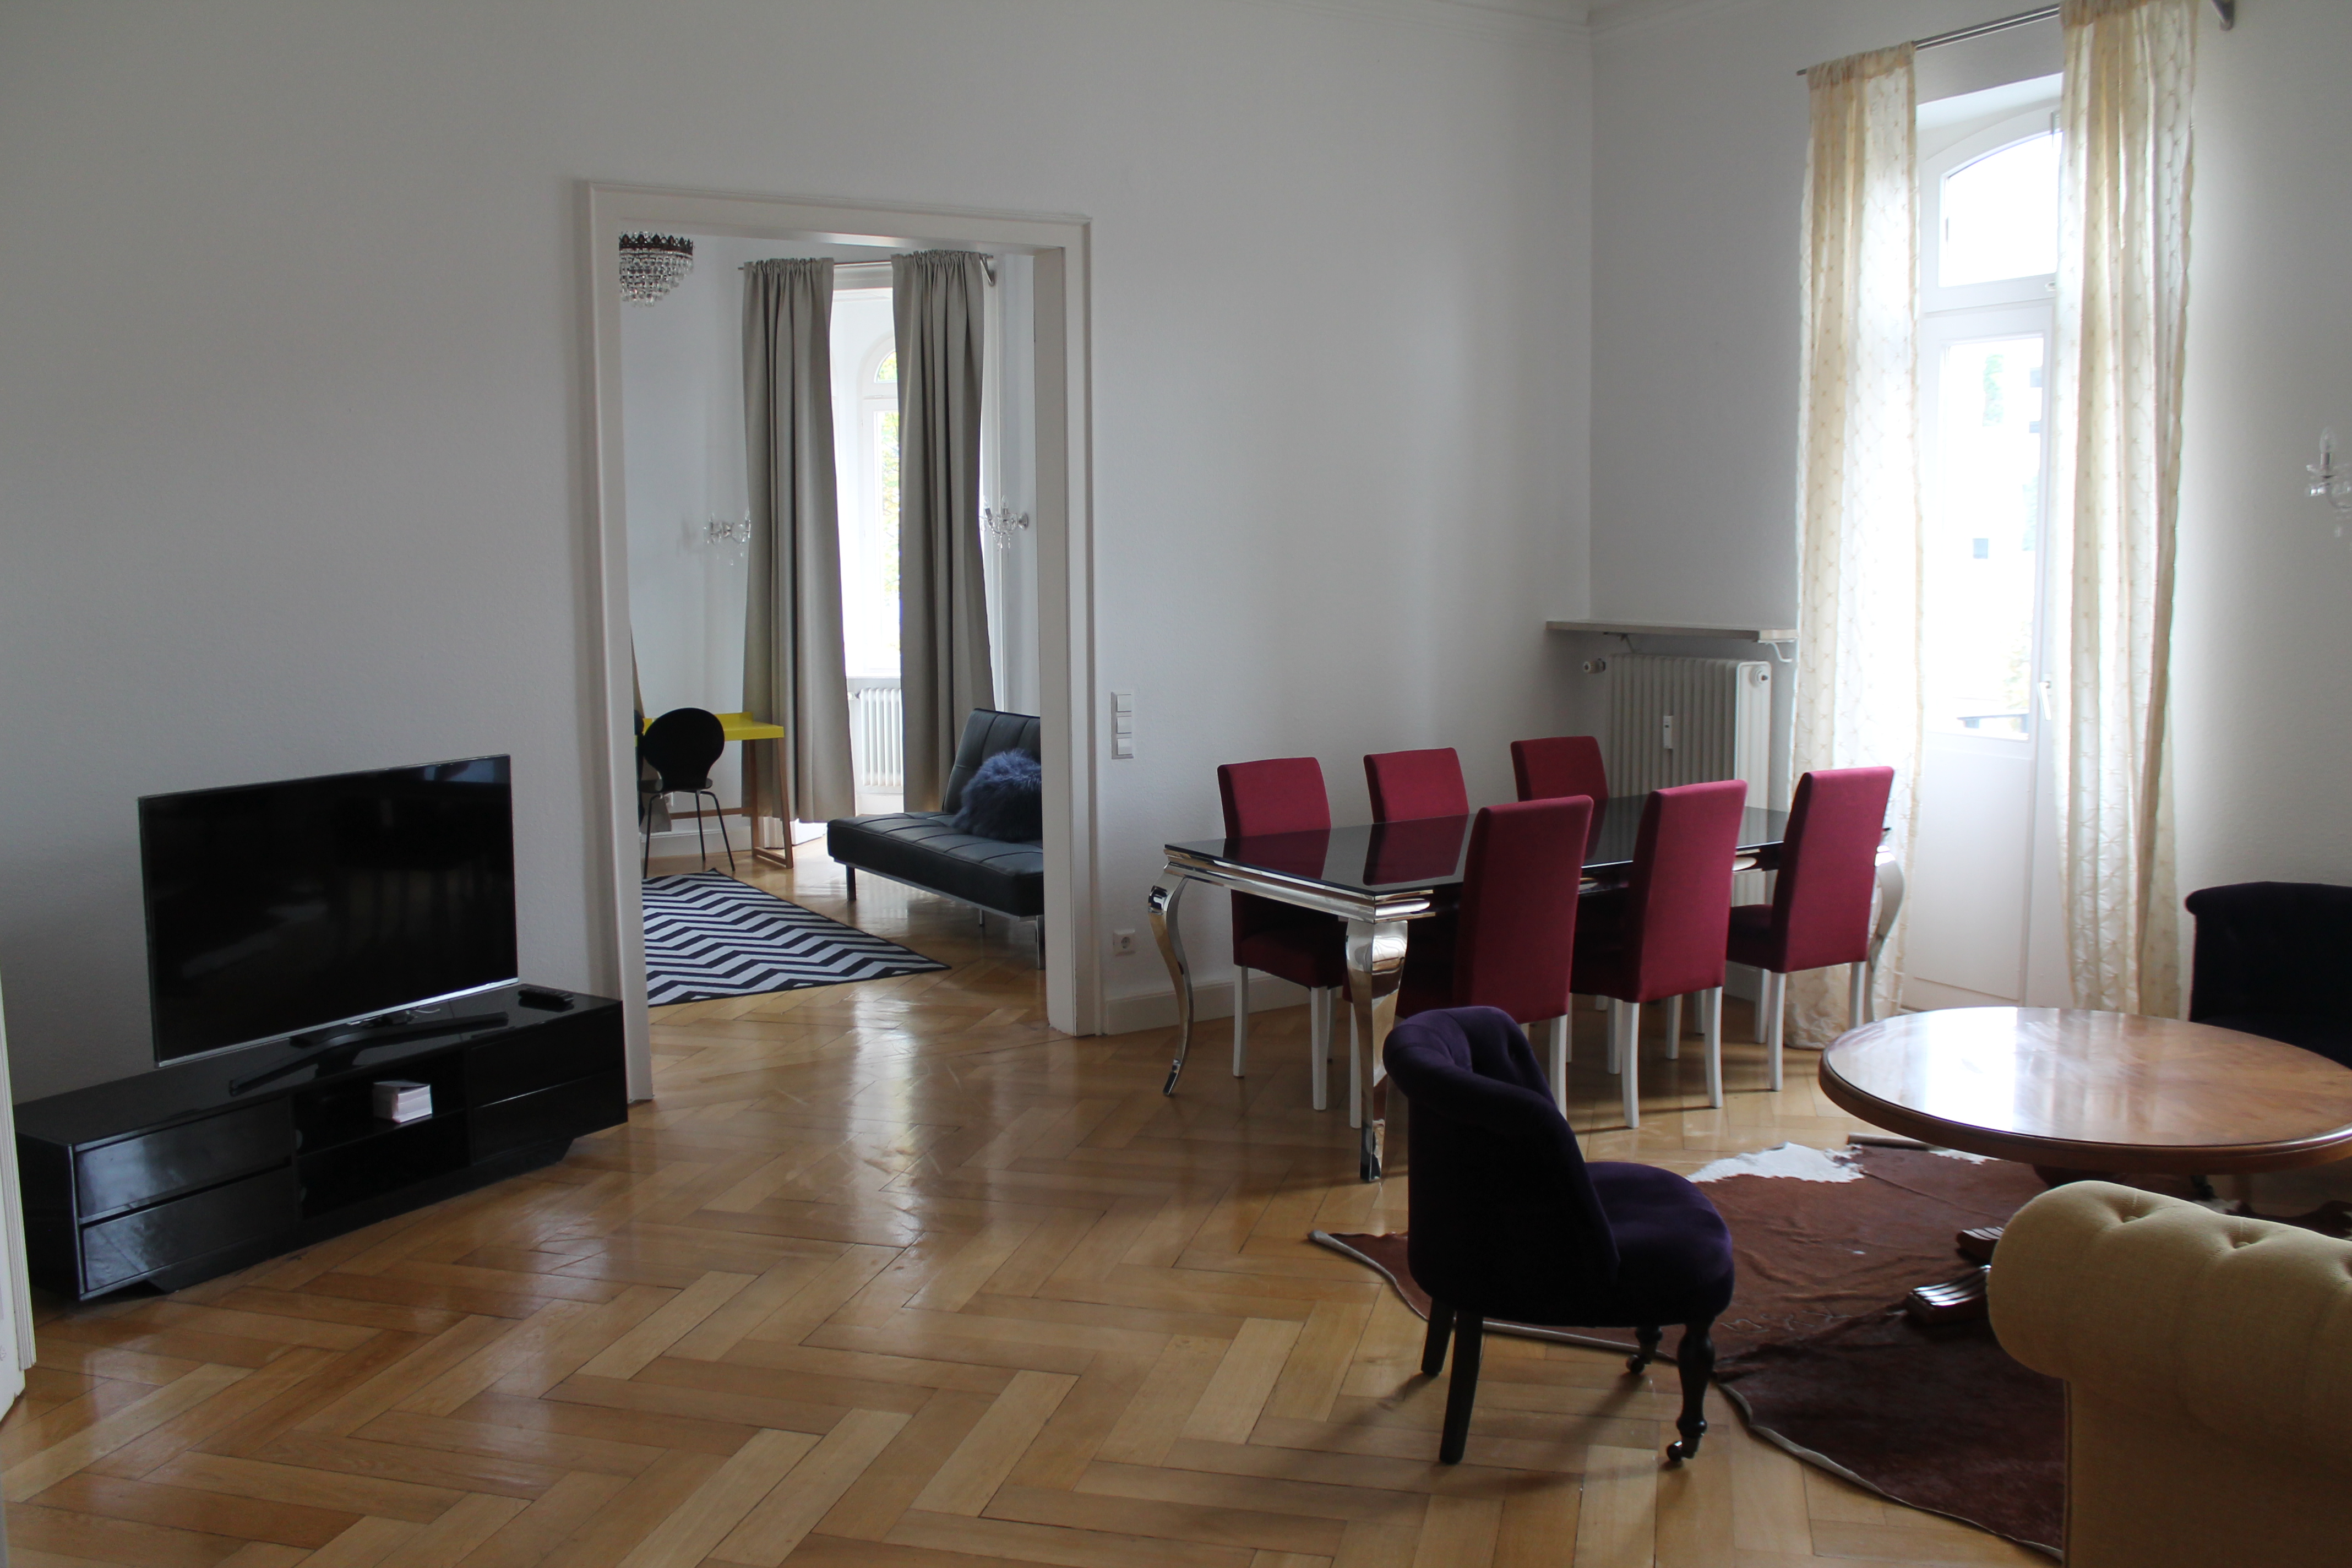 2,5-Zimmer-Altbau-Eigentumswohnung inkl. separatem 2-Zi-Apartment in Baden-Baden